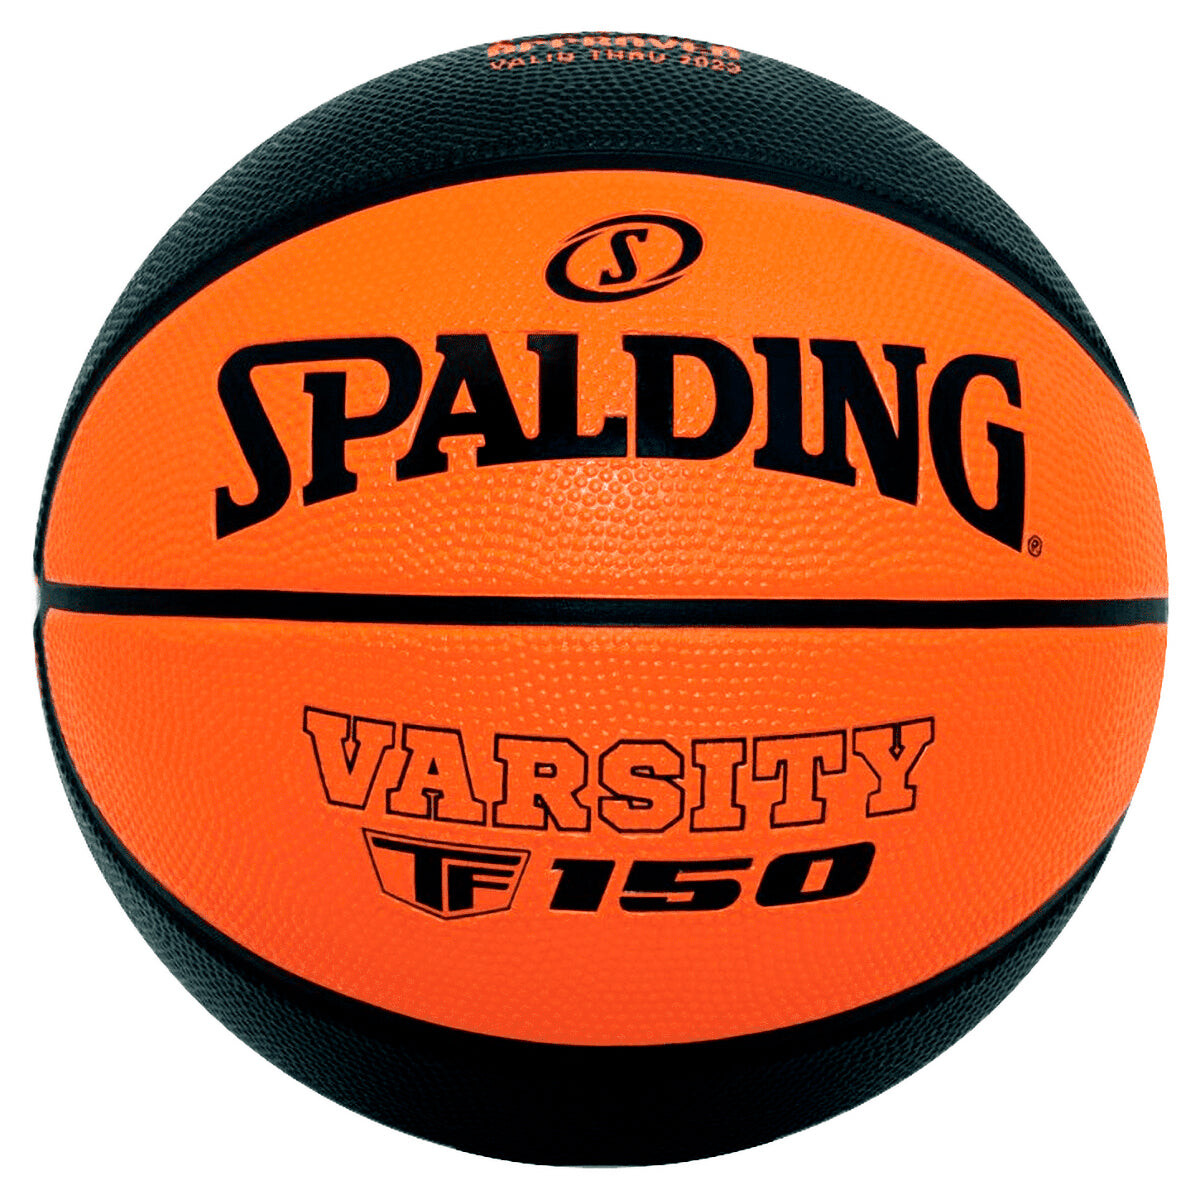 Pelota Spalding Basketball Tf 150 Goma N5 + Regalos - Naranja/Negro 